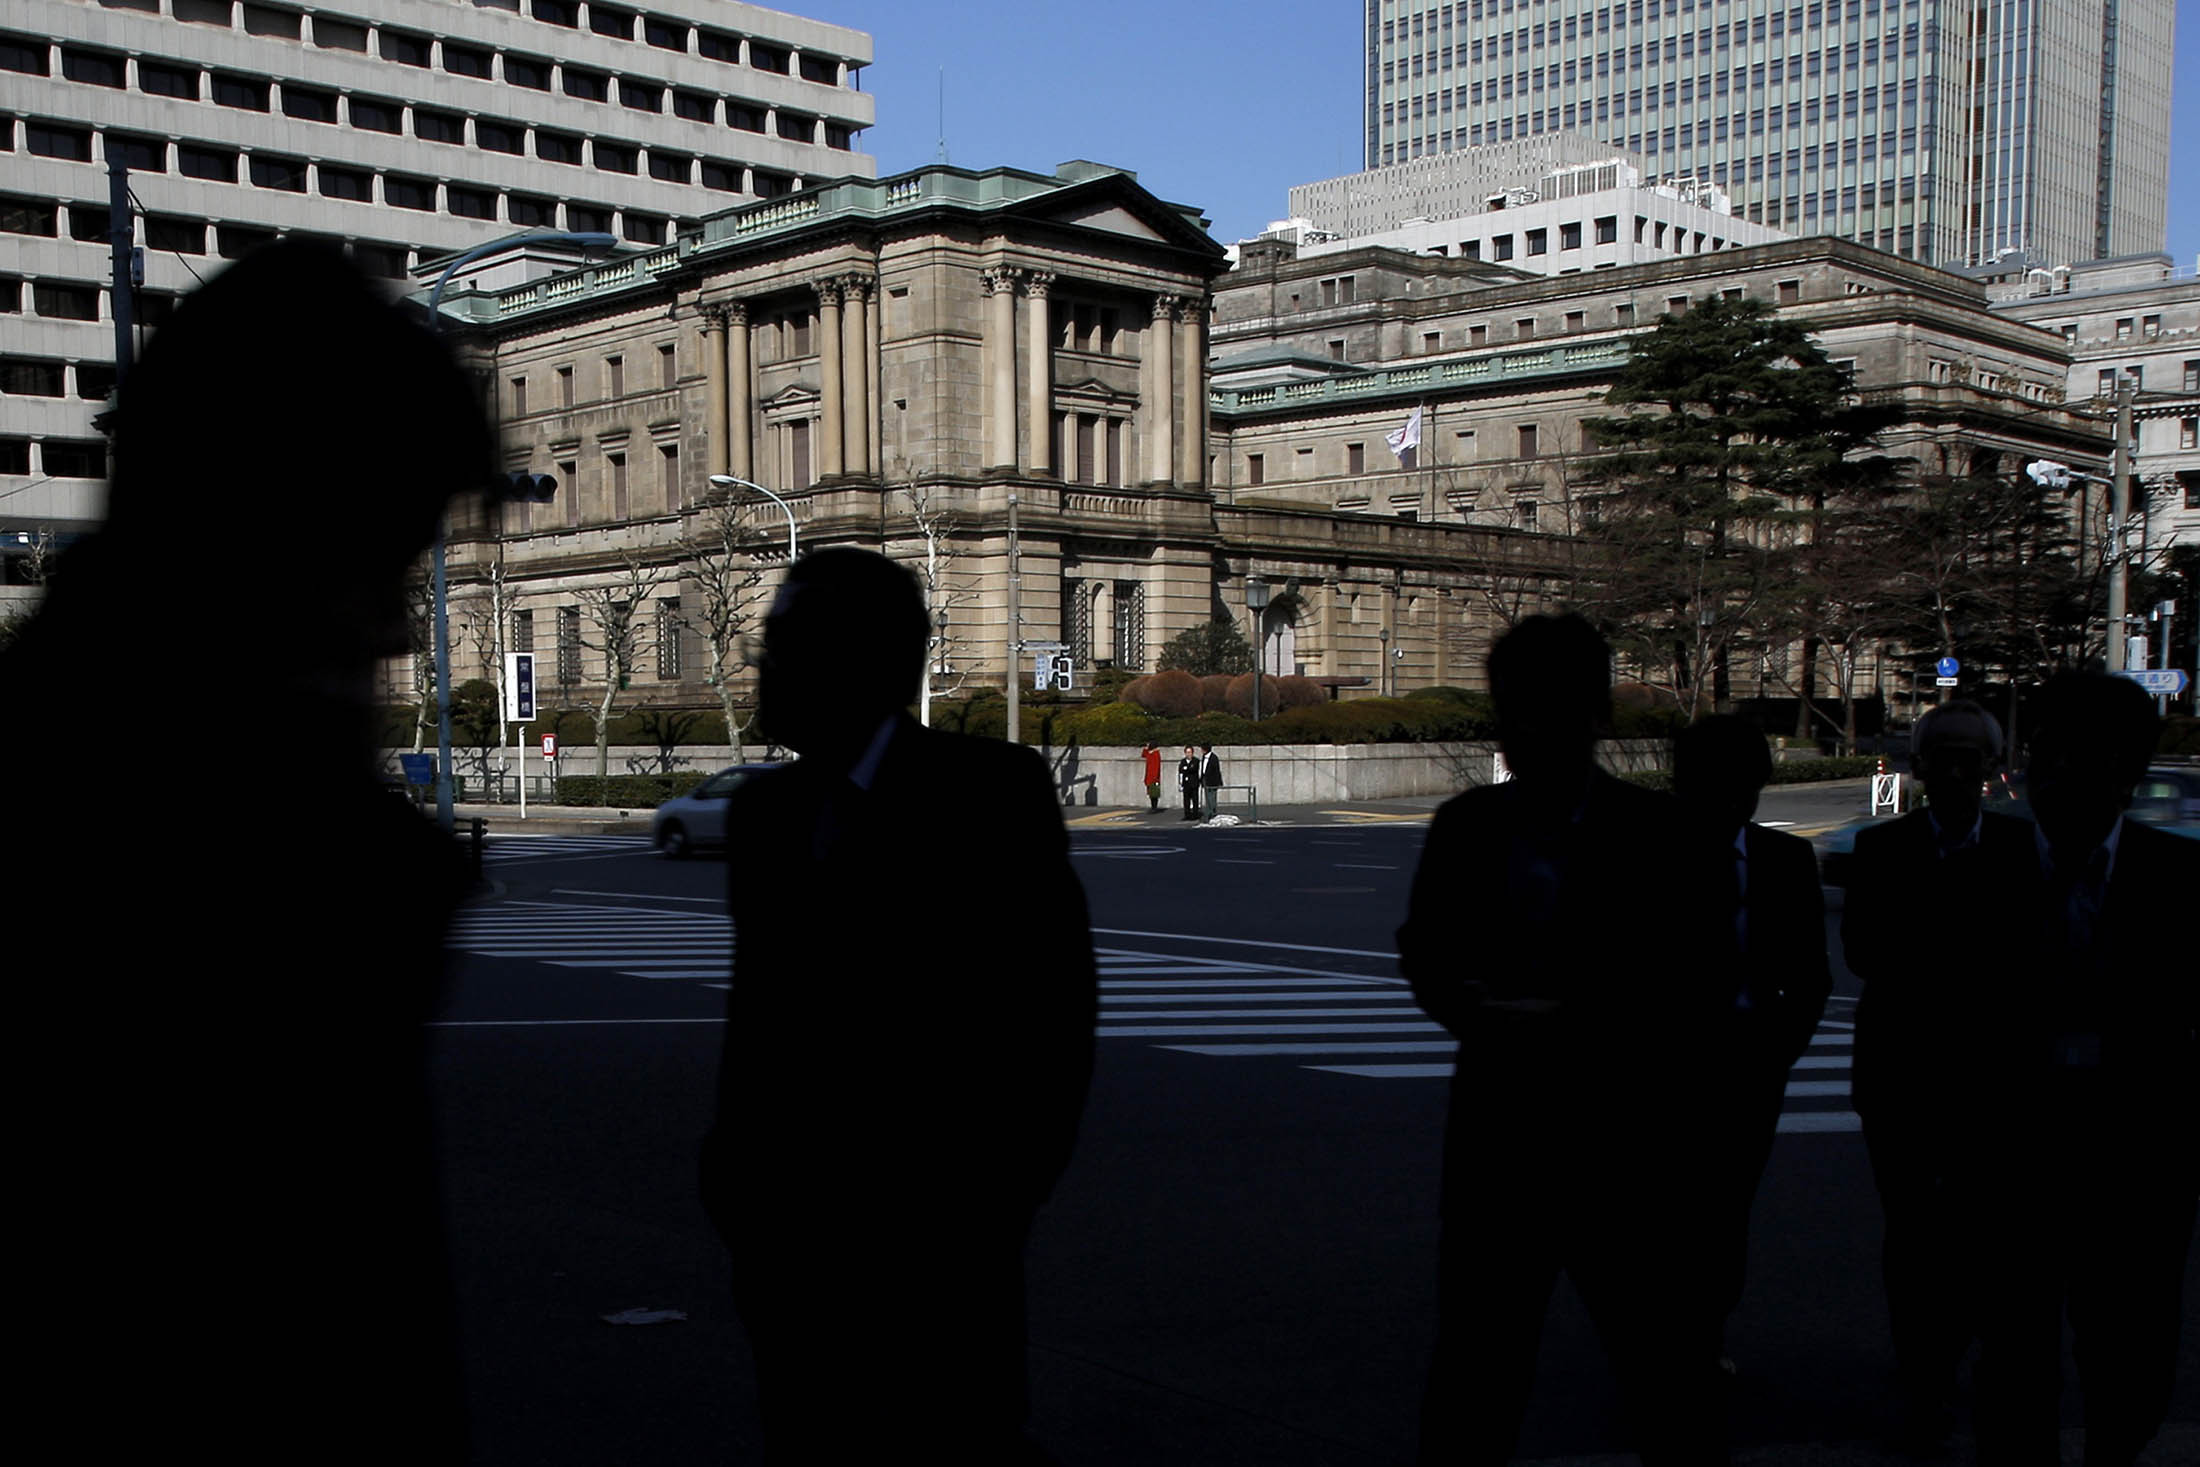 Dollar/yen firm on BOJ policy speculation, risk aversion limits upside